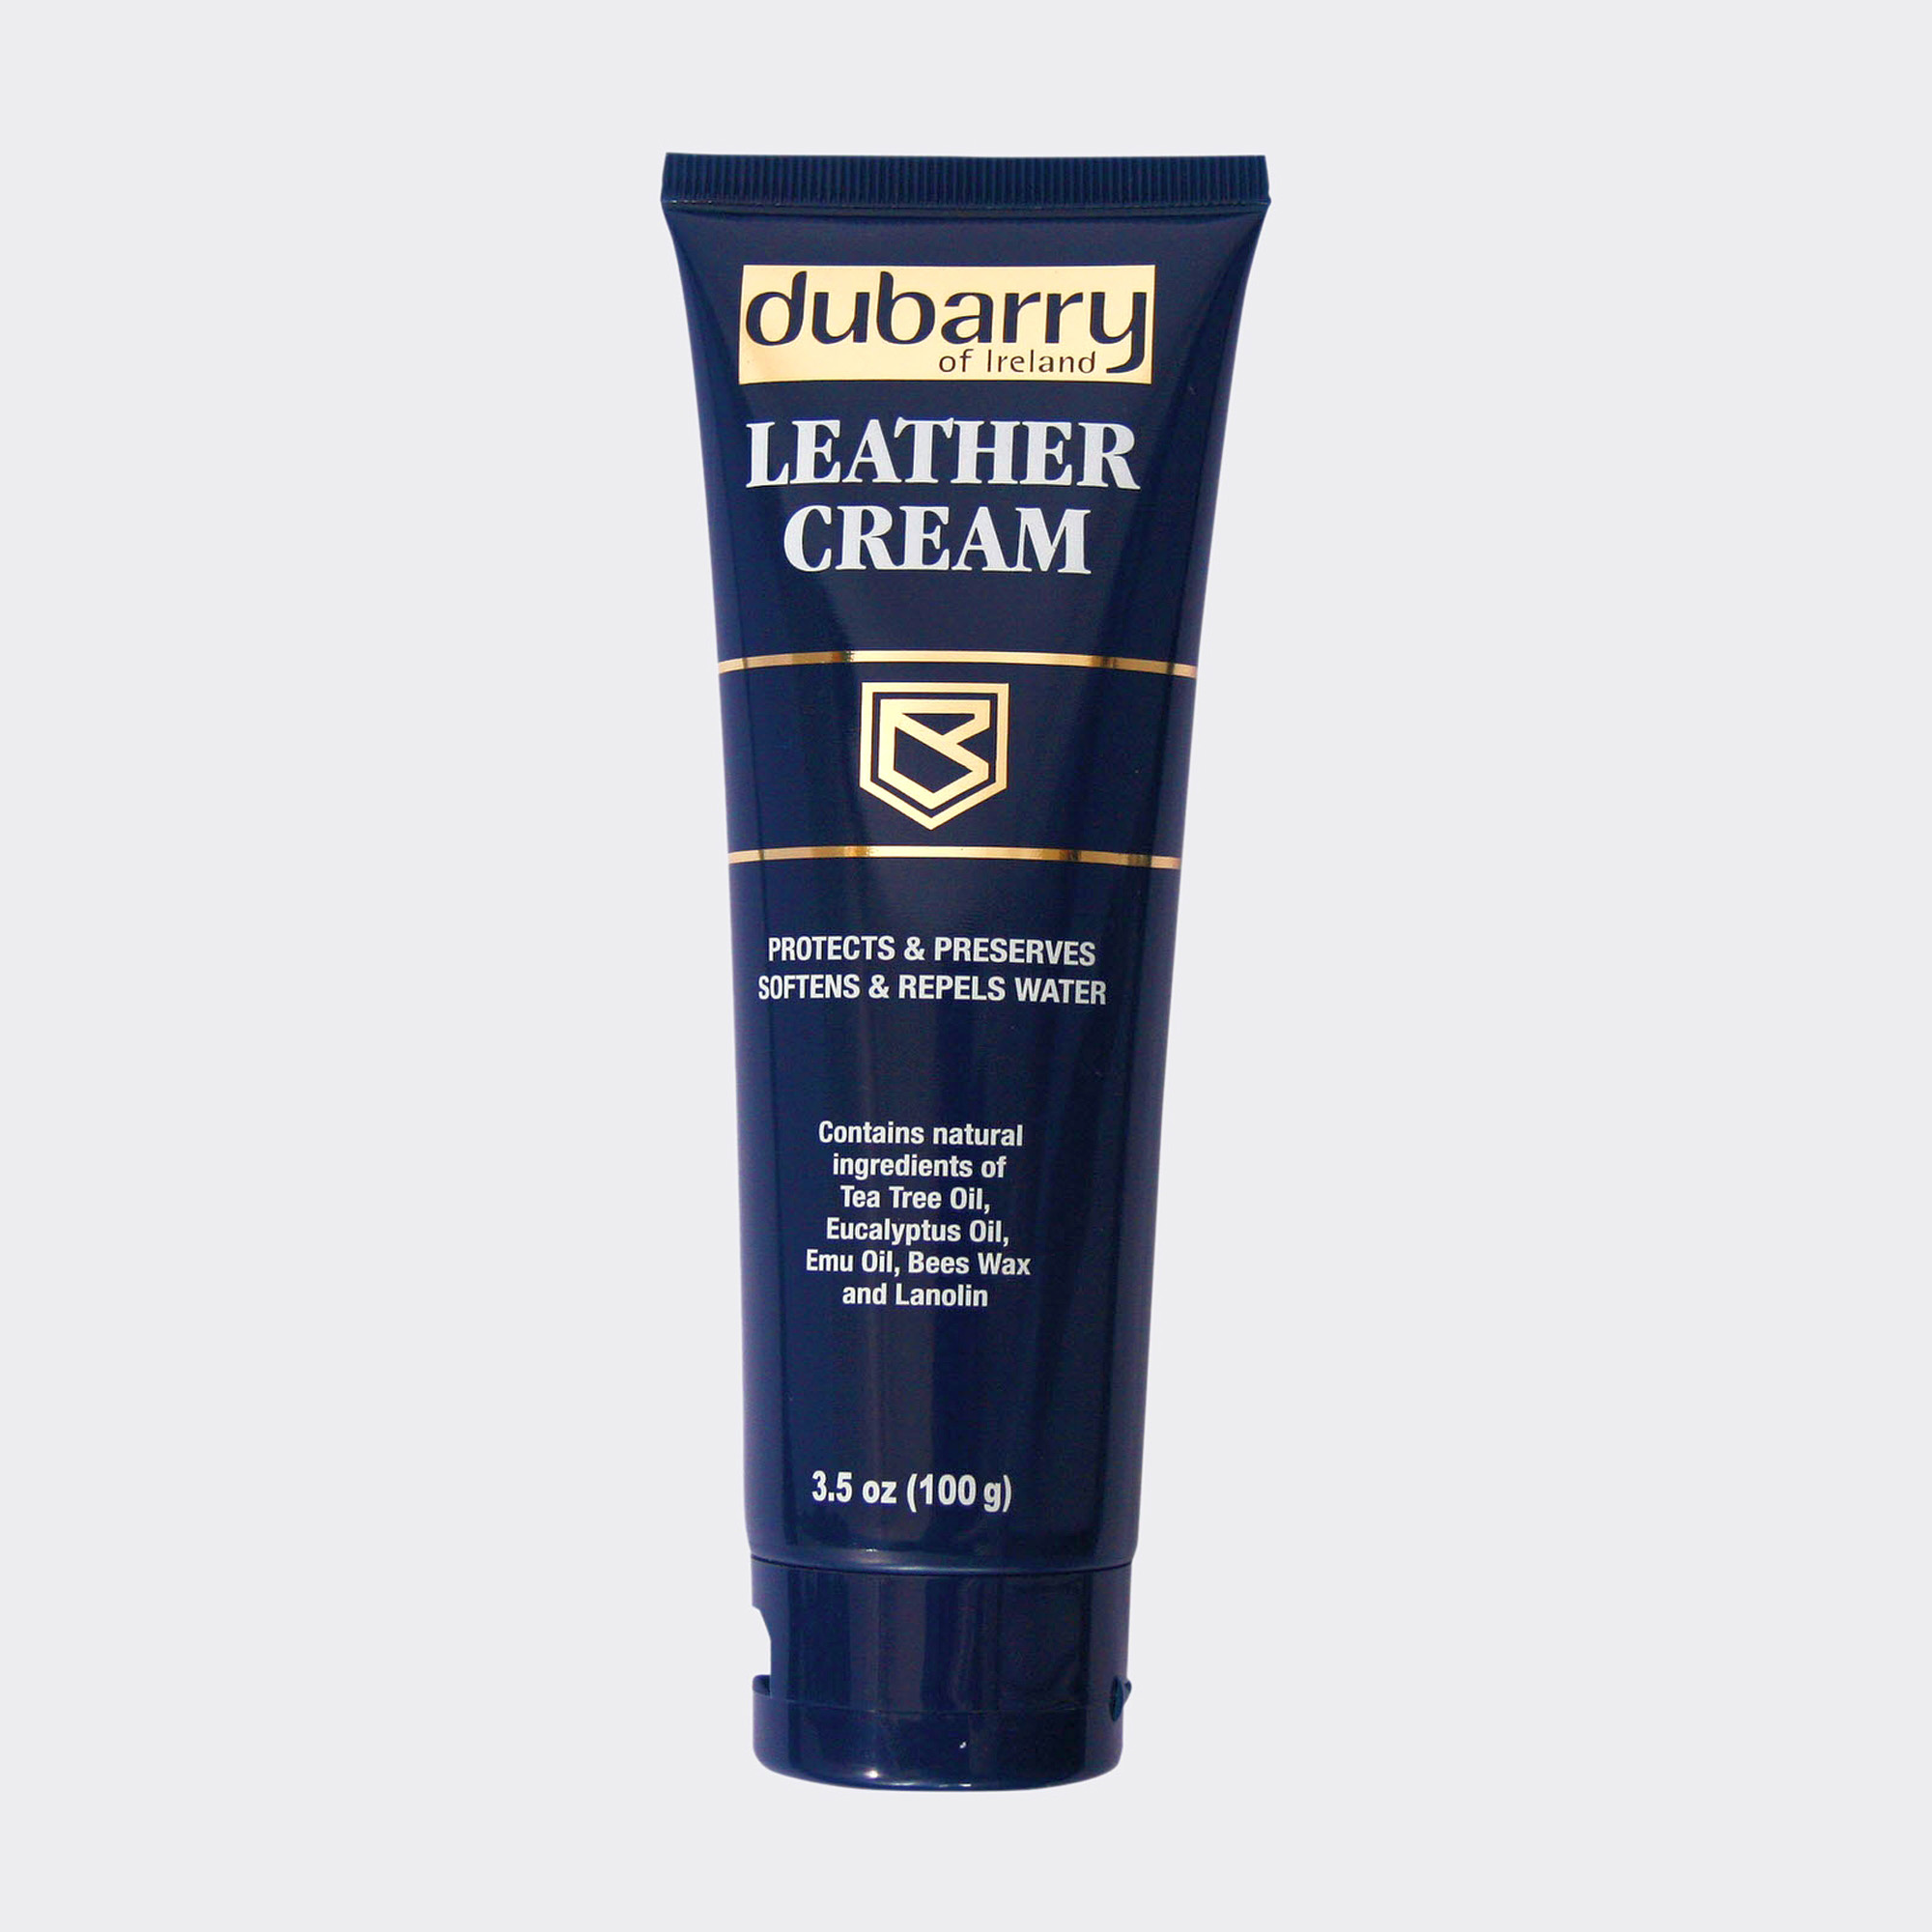 Dubarry Leather Cream Tube